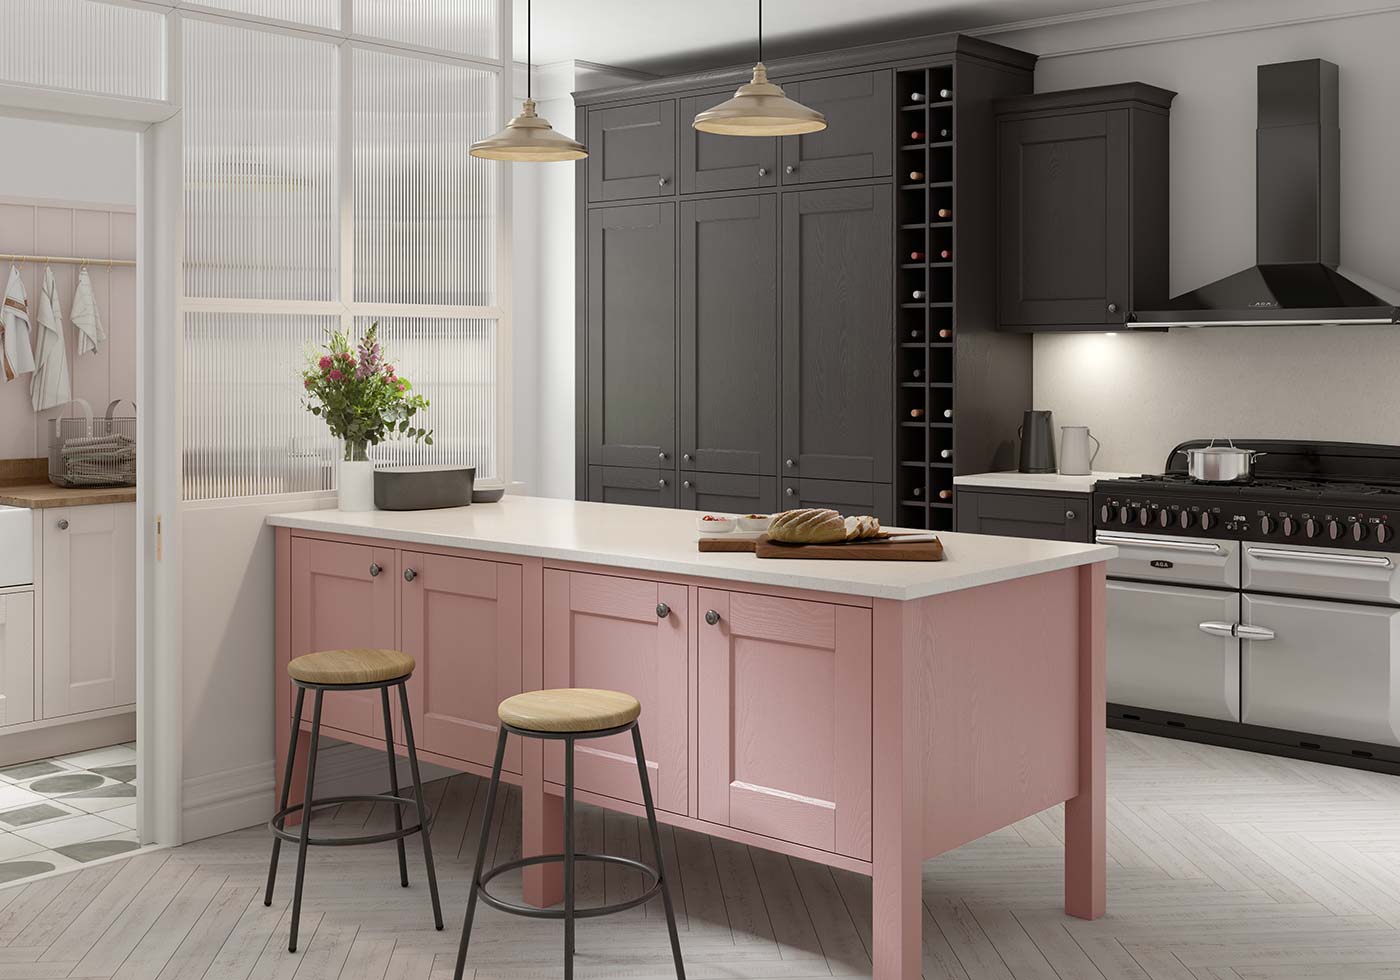 Classic pink kitchen